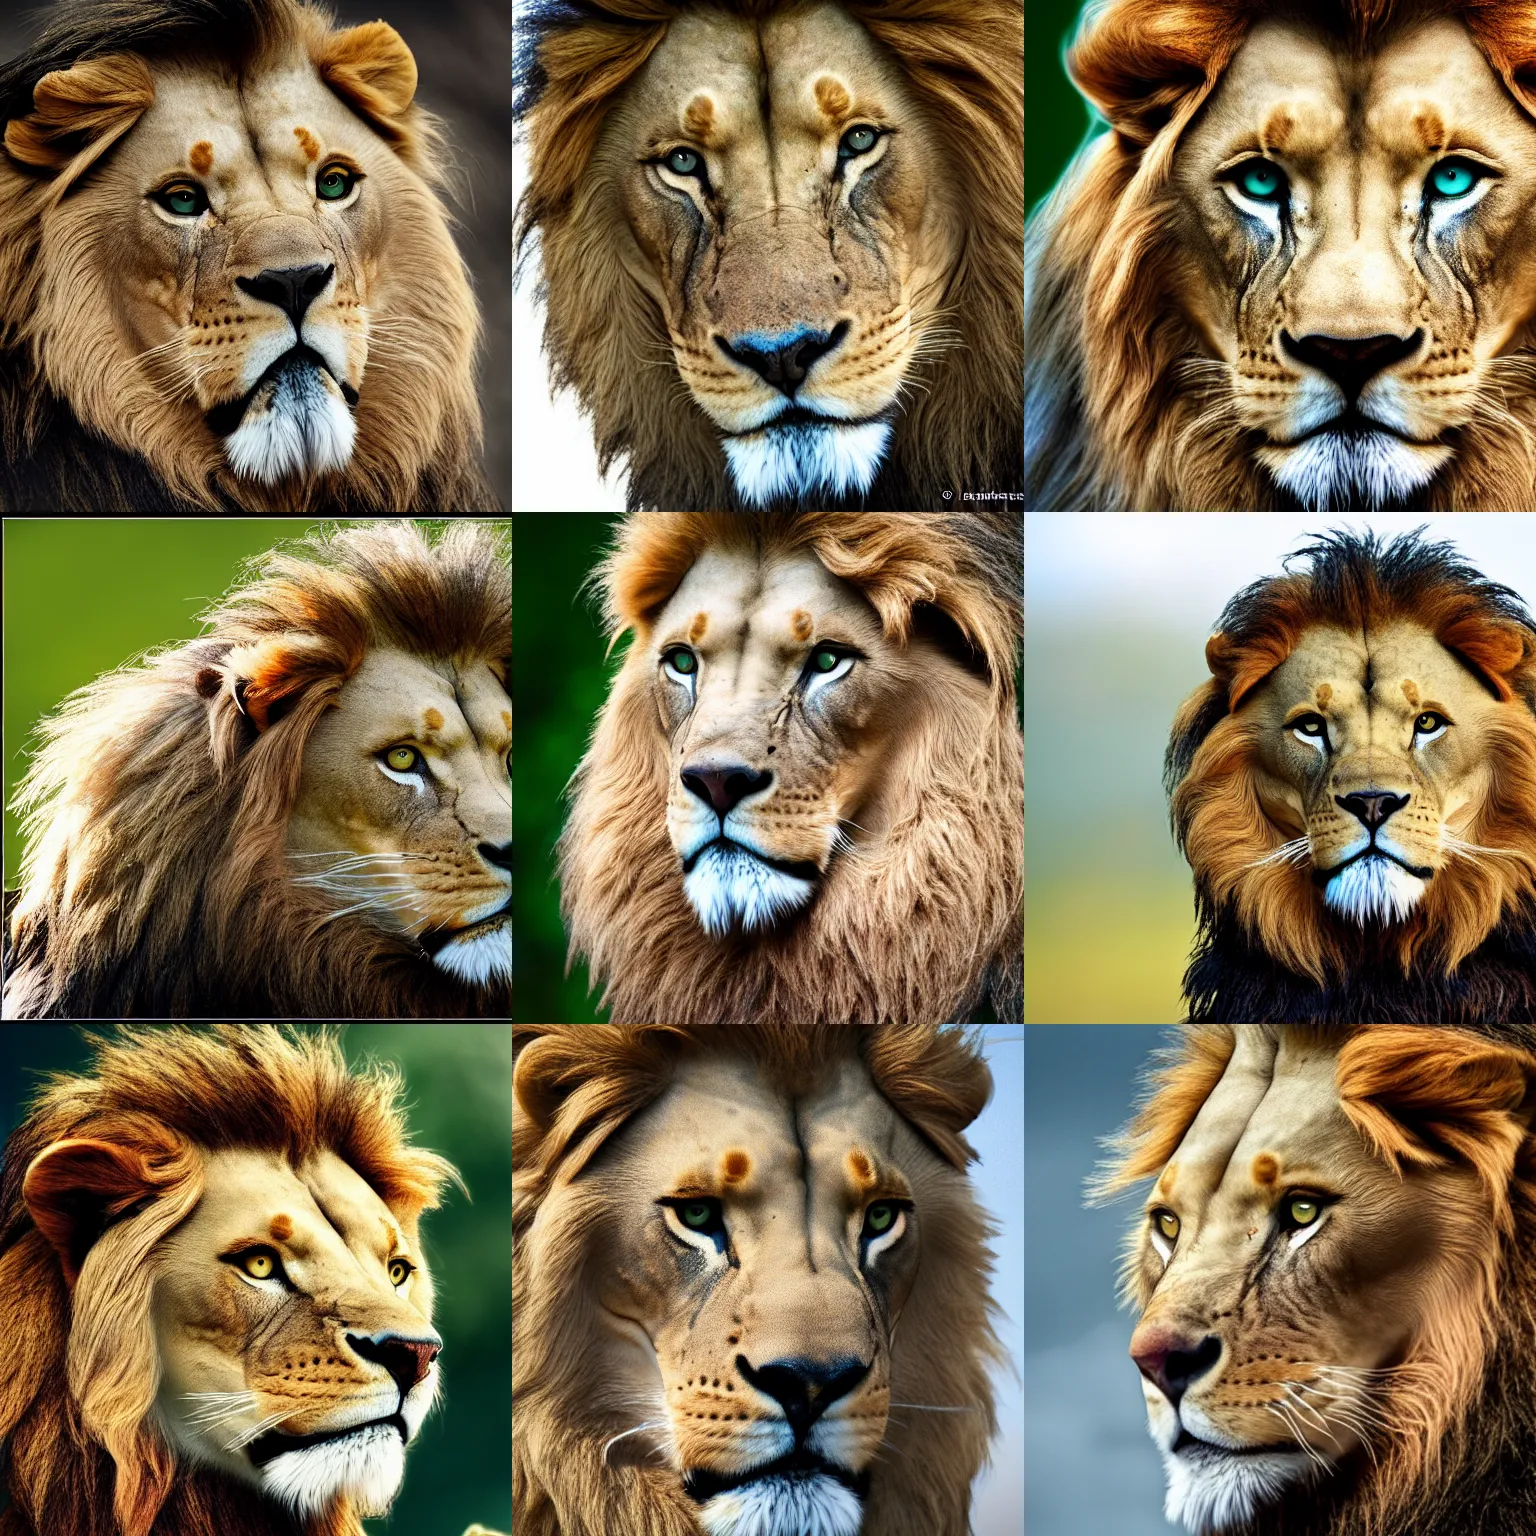 Prompt: leonardo de caprio as a bird lion hybrid, (EOS 5DS R, ISO100, f/8, 1/125, 84mm, postprocessed, crisp face, facial features)